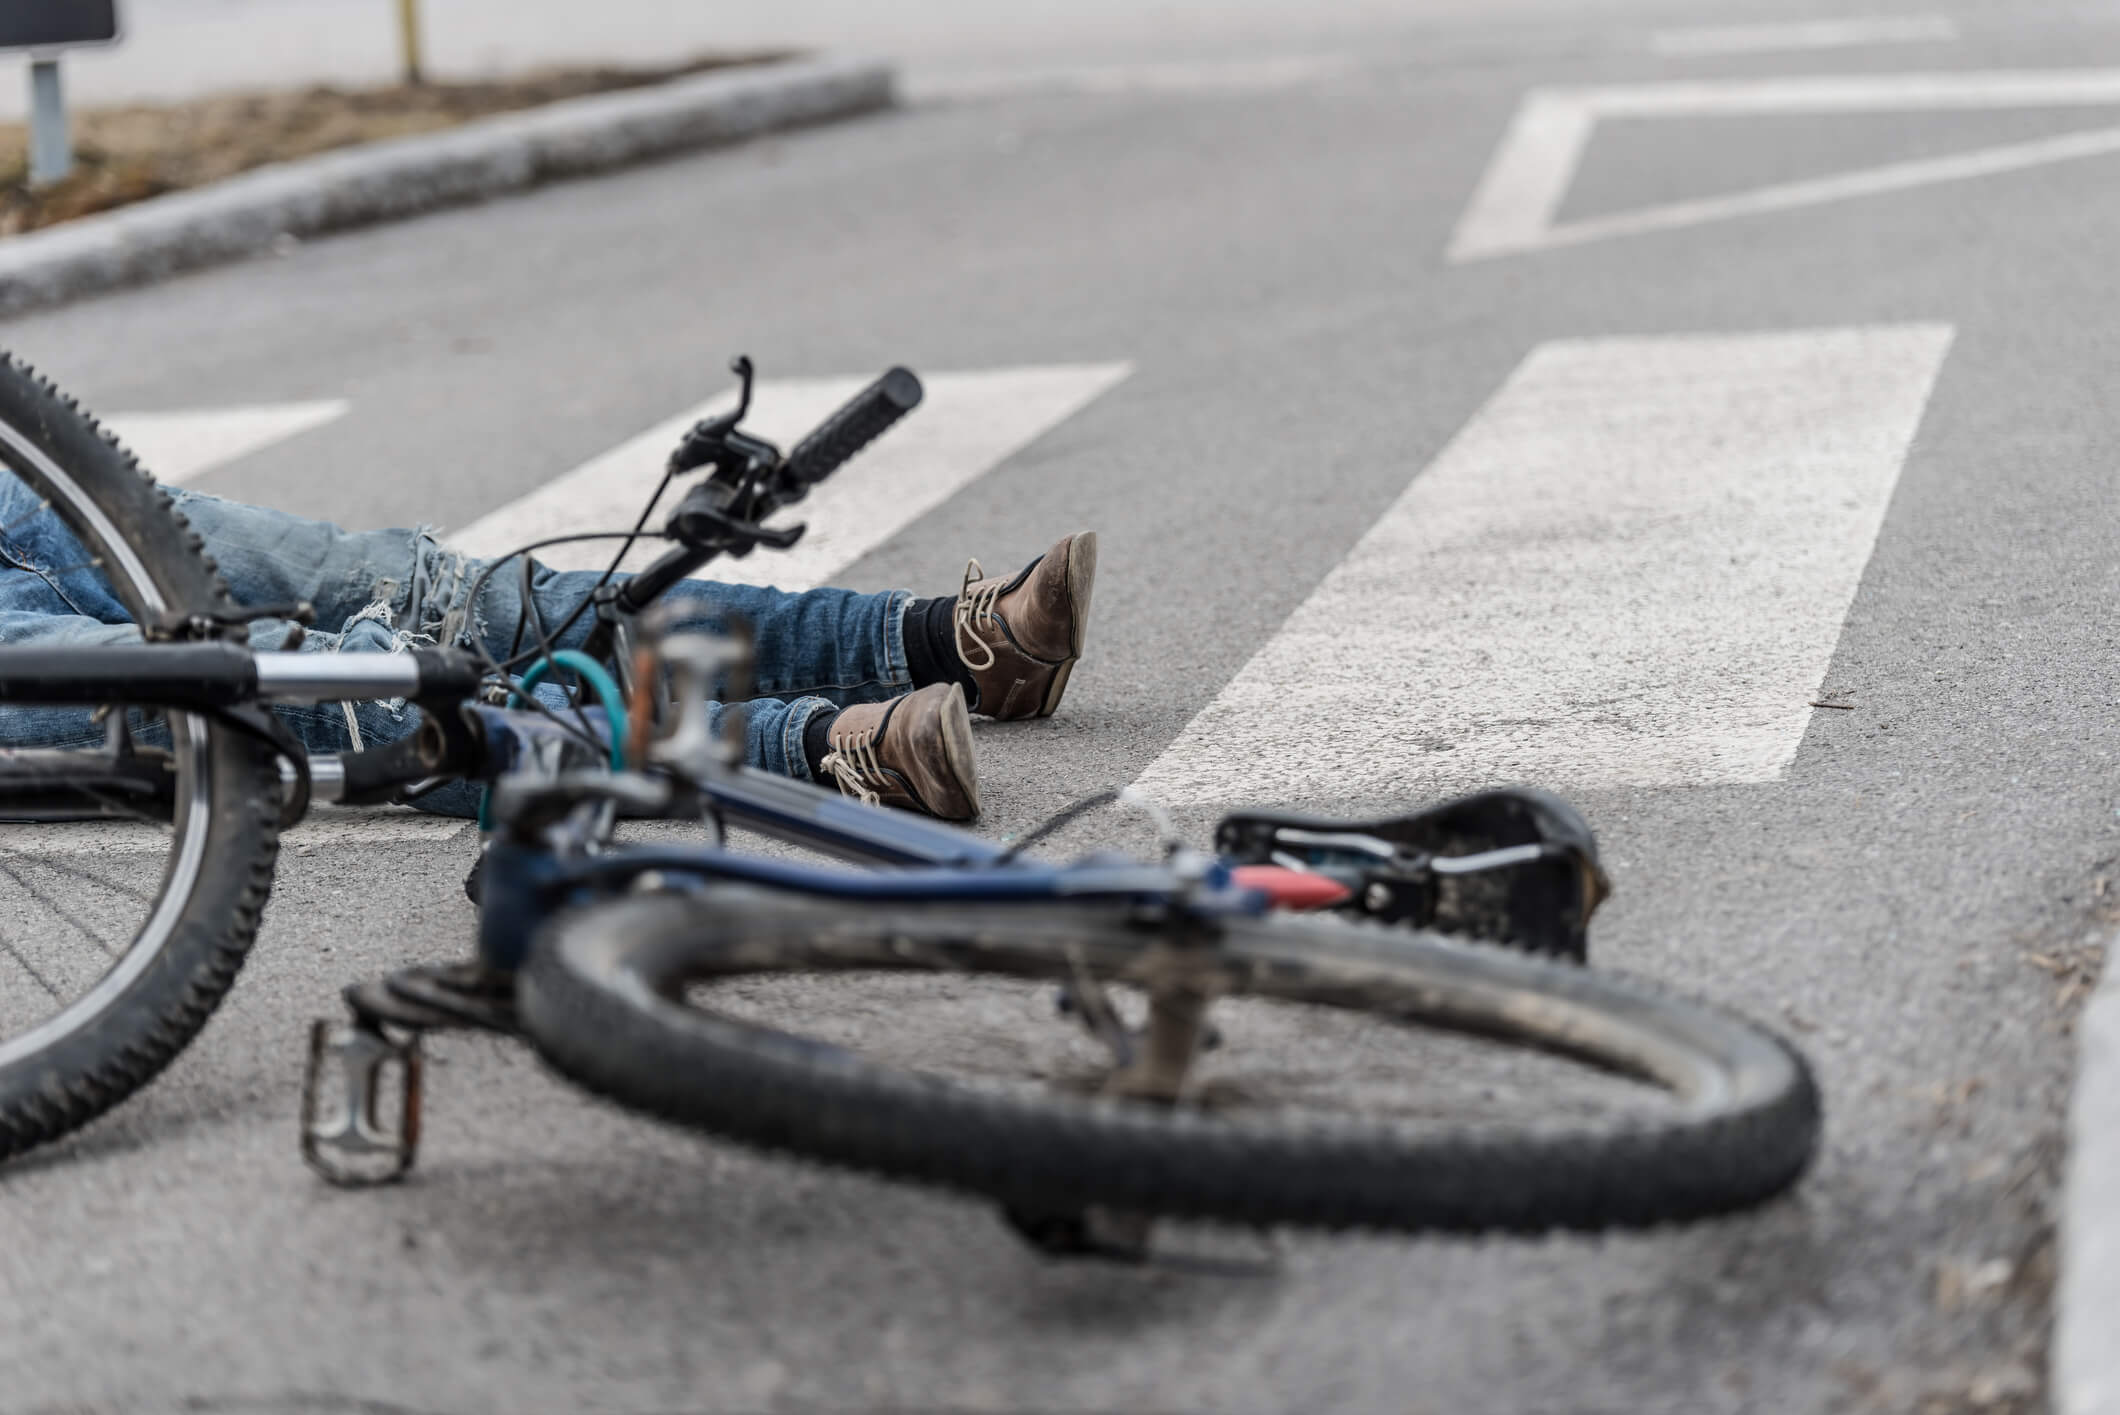 Leg Injury In Bike Accident